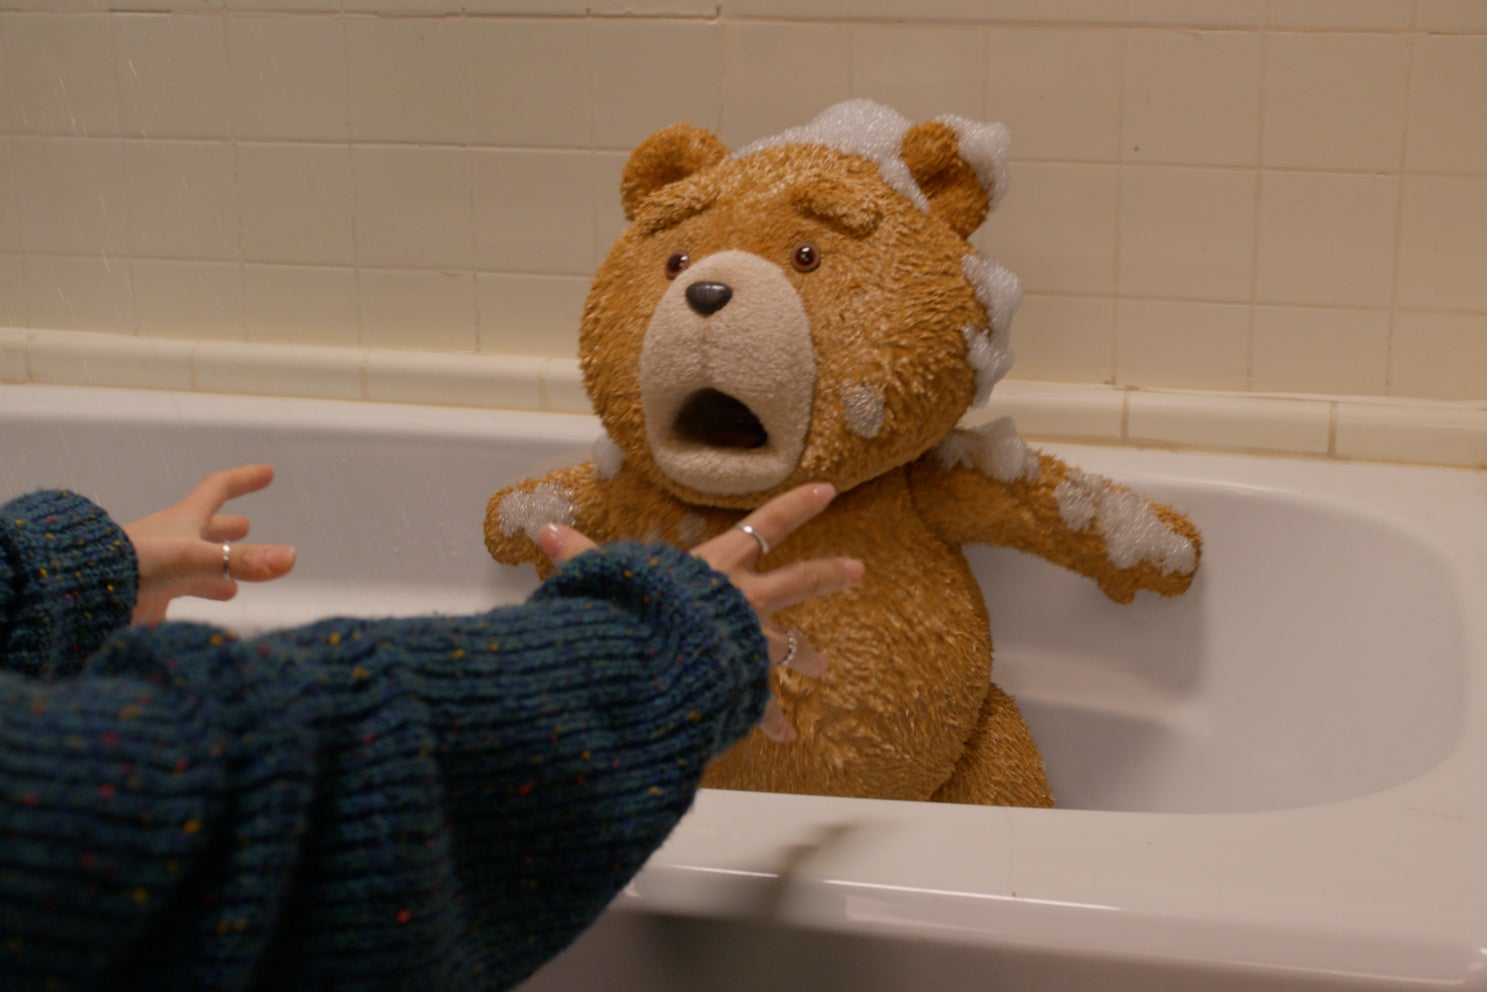 The obnoxious Ted (Seth MacFarlane) receives a bath in the new TV prequel